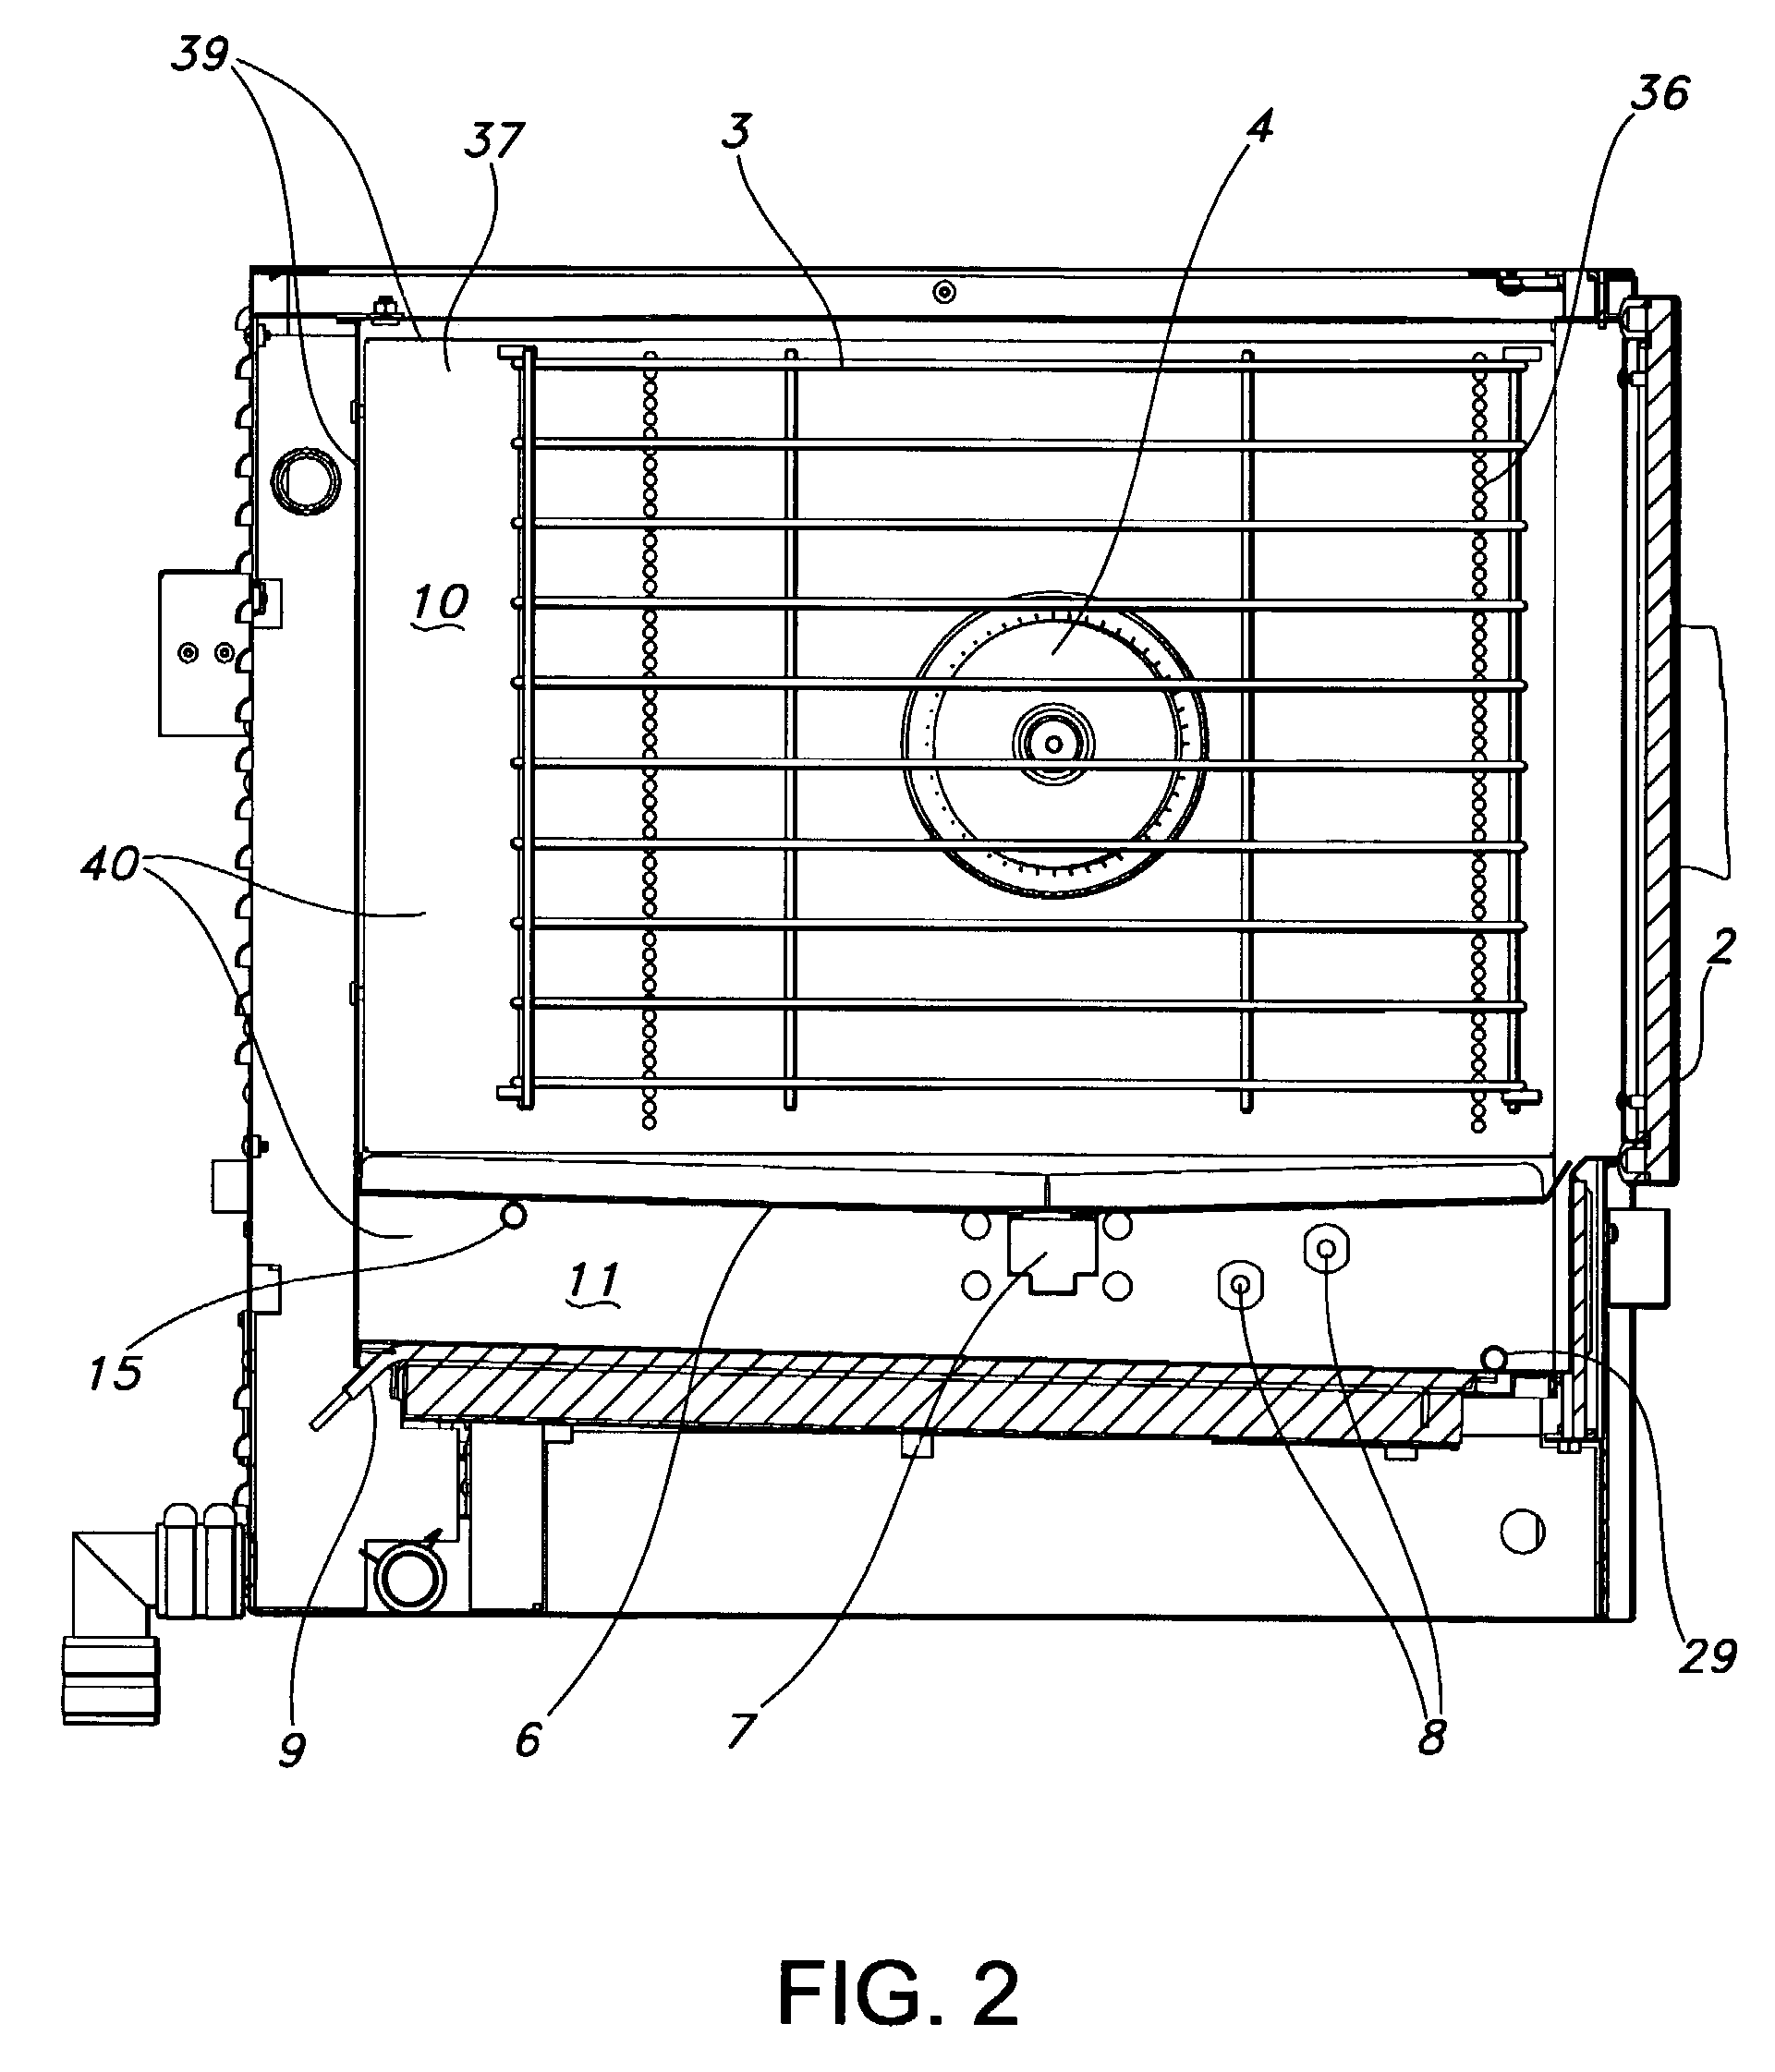 Boilerless steamer apparatus